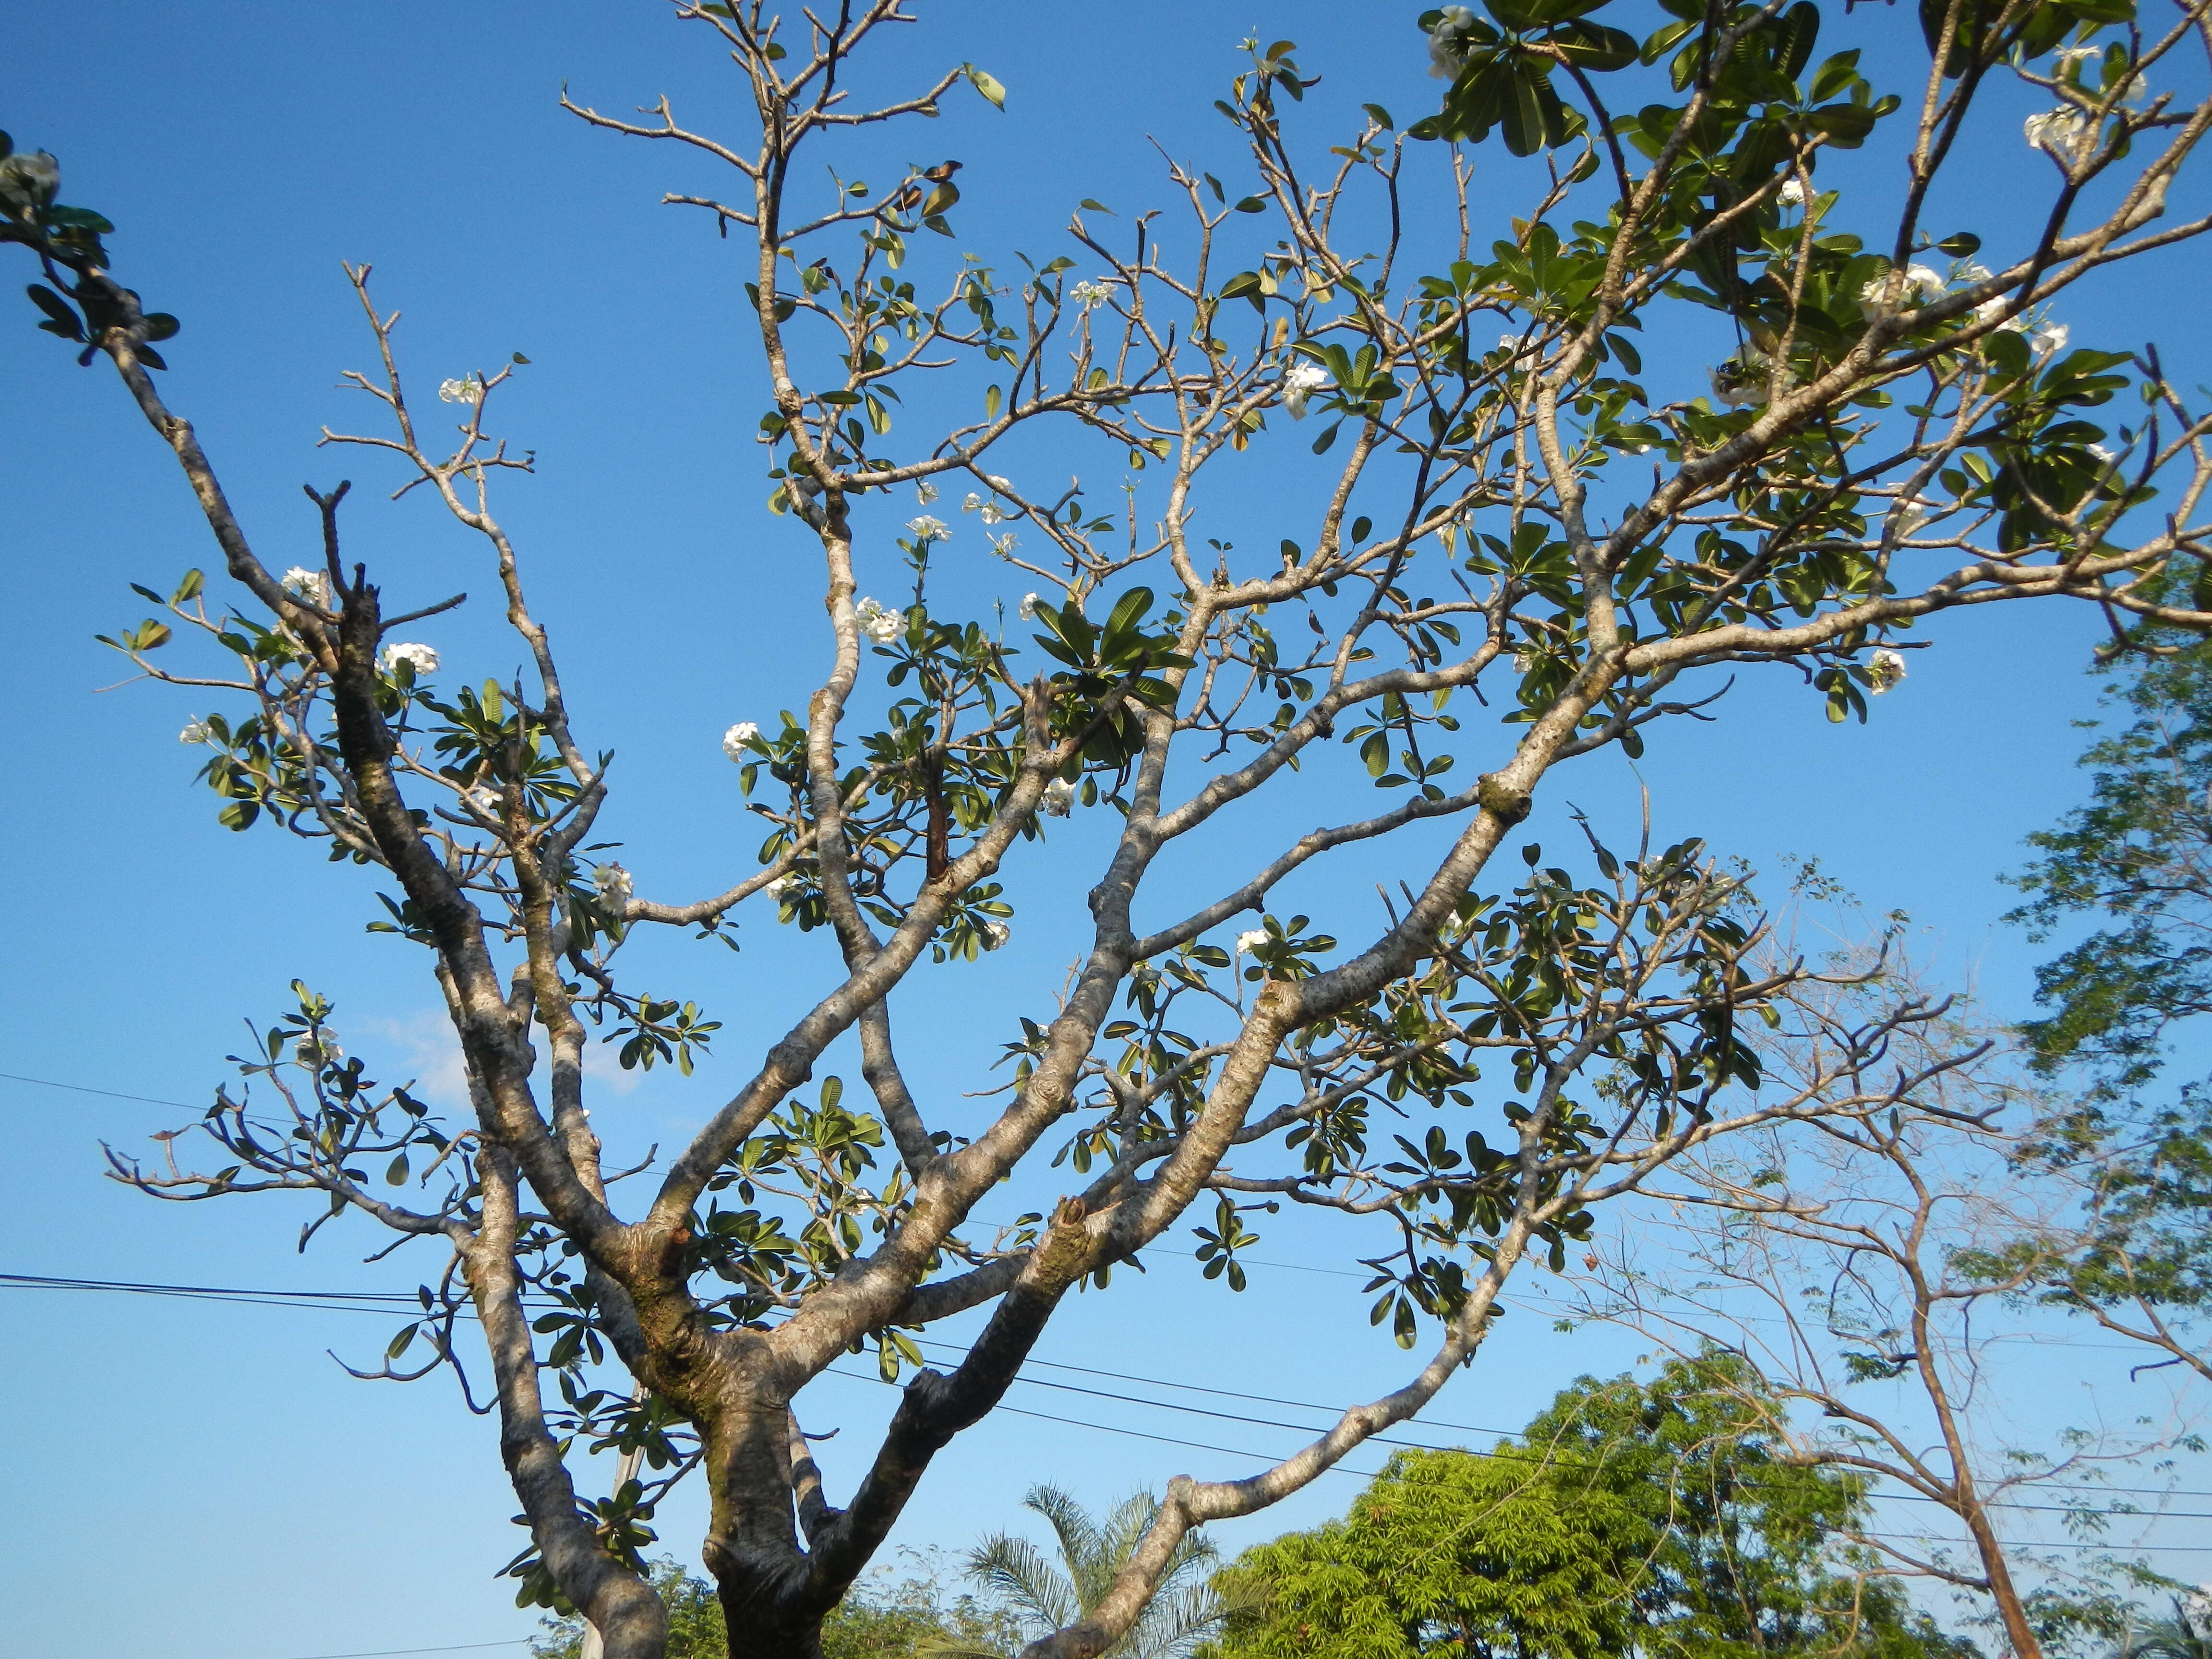 Image of nosegaytree